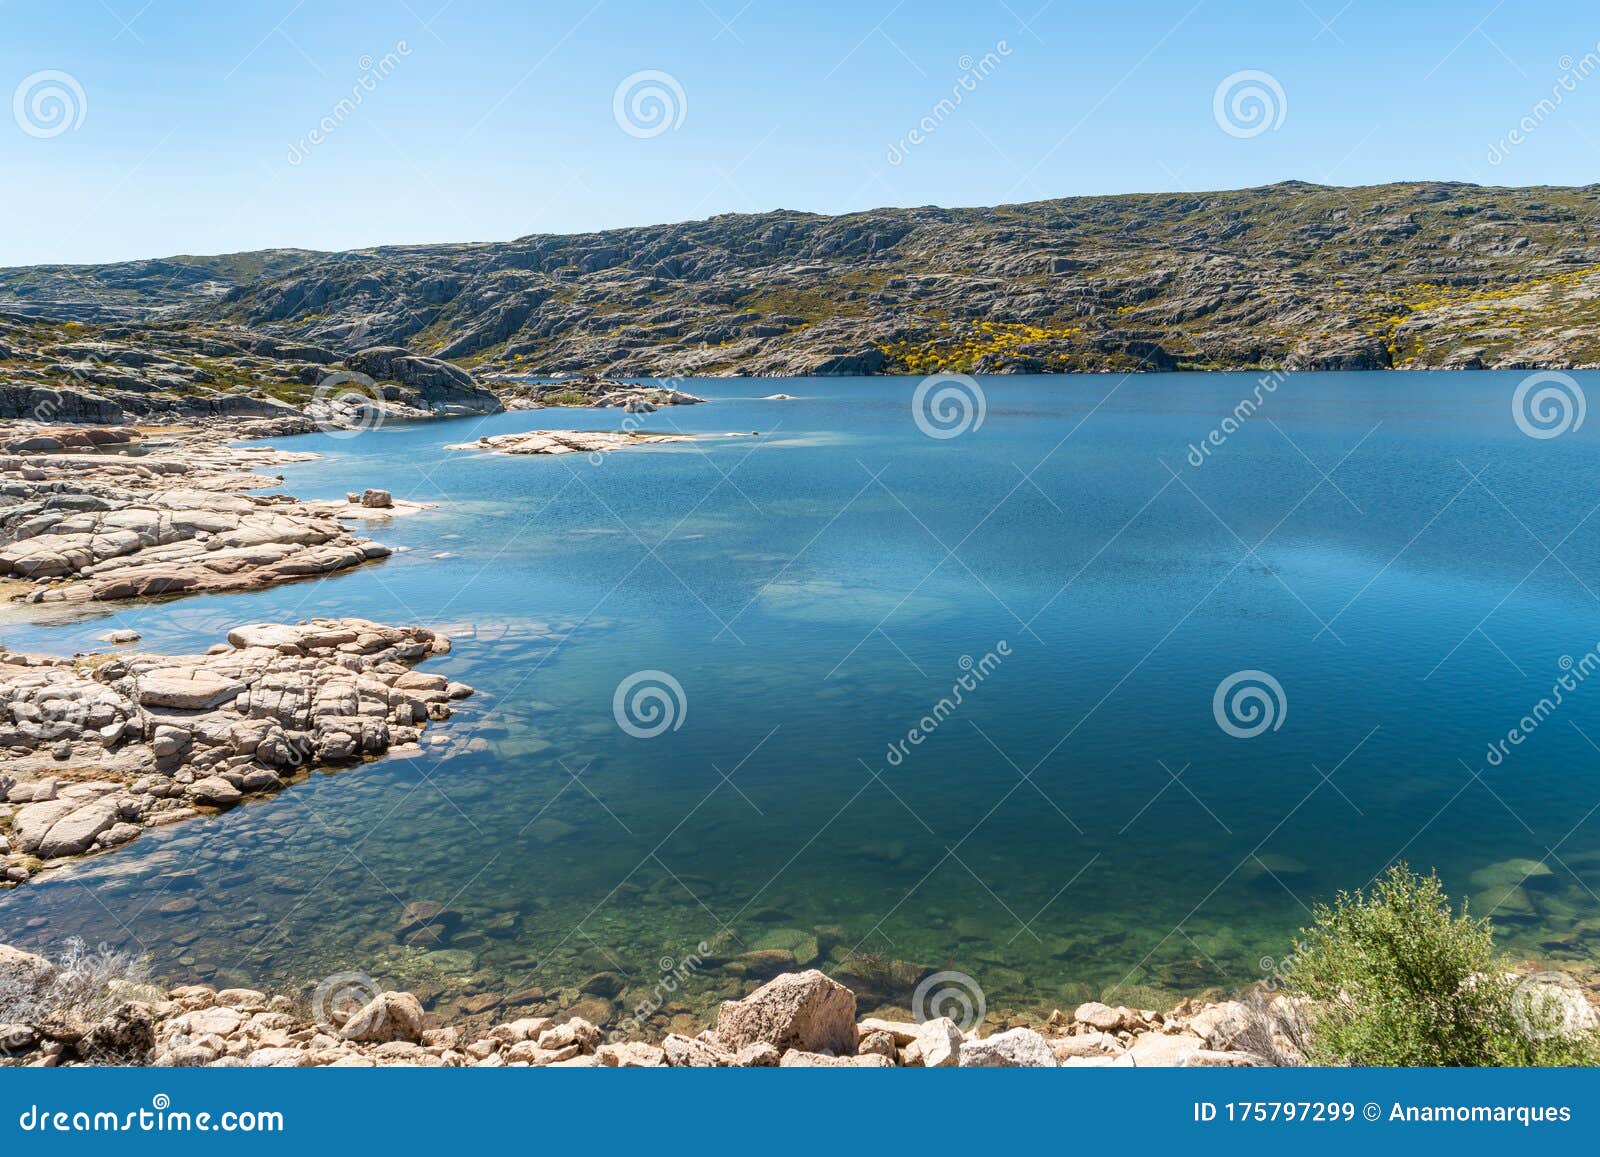 lagoa comprida is the largest lake of serra da estrela natural park, portugal